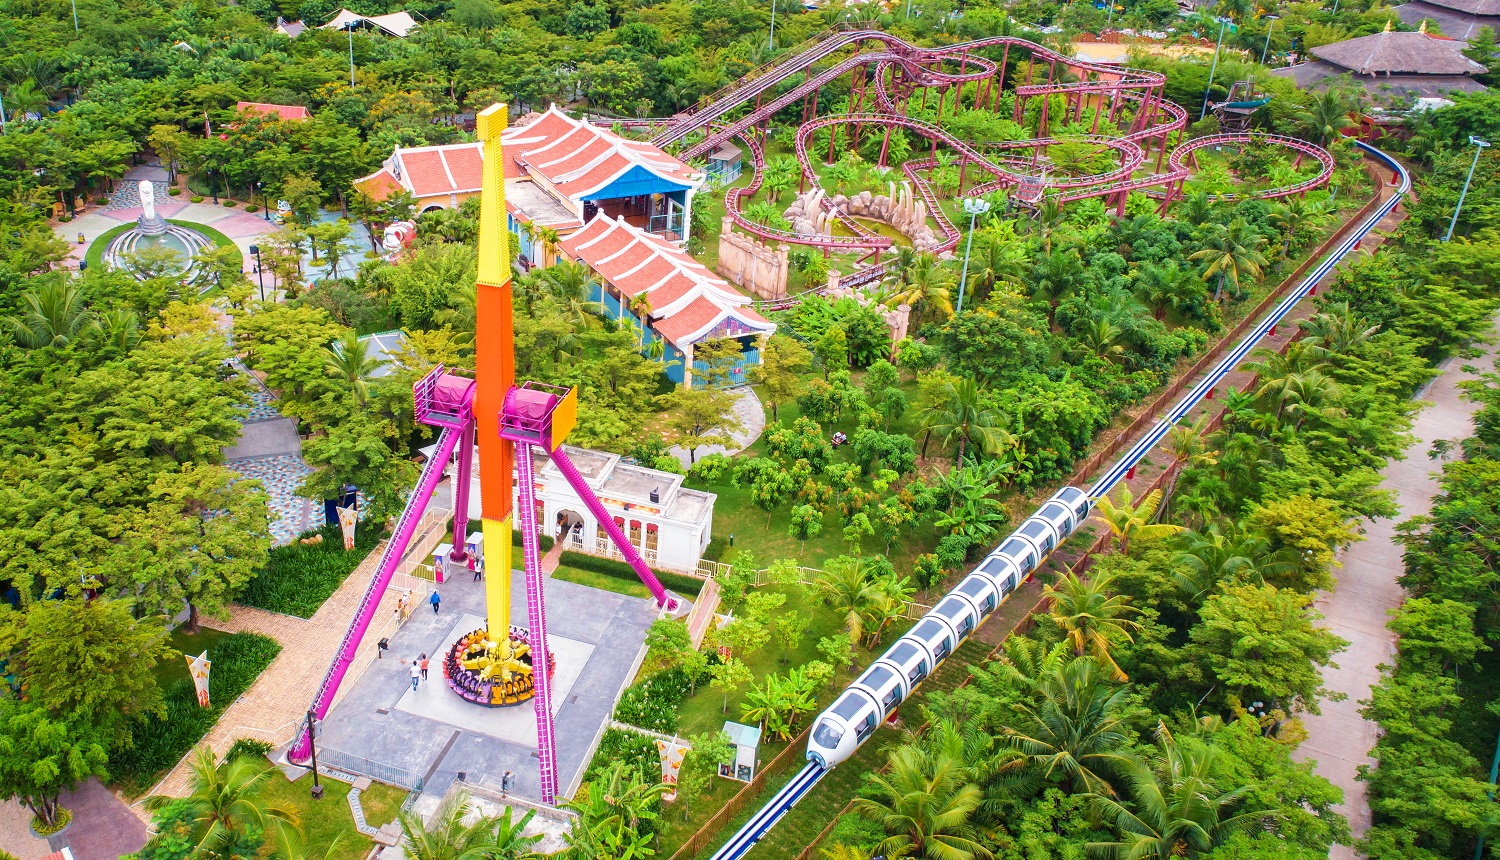 The theme park at Sun World Danang Wonders.